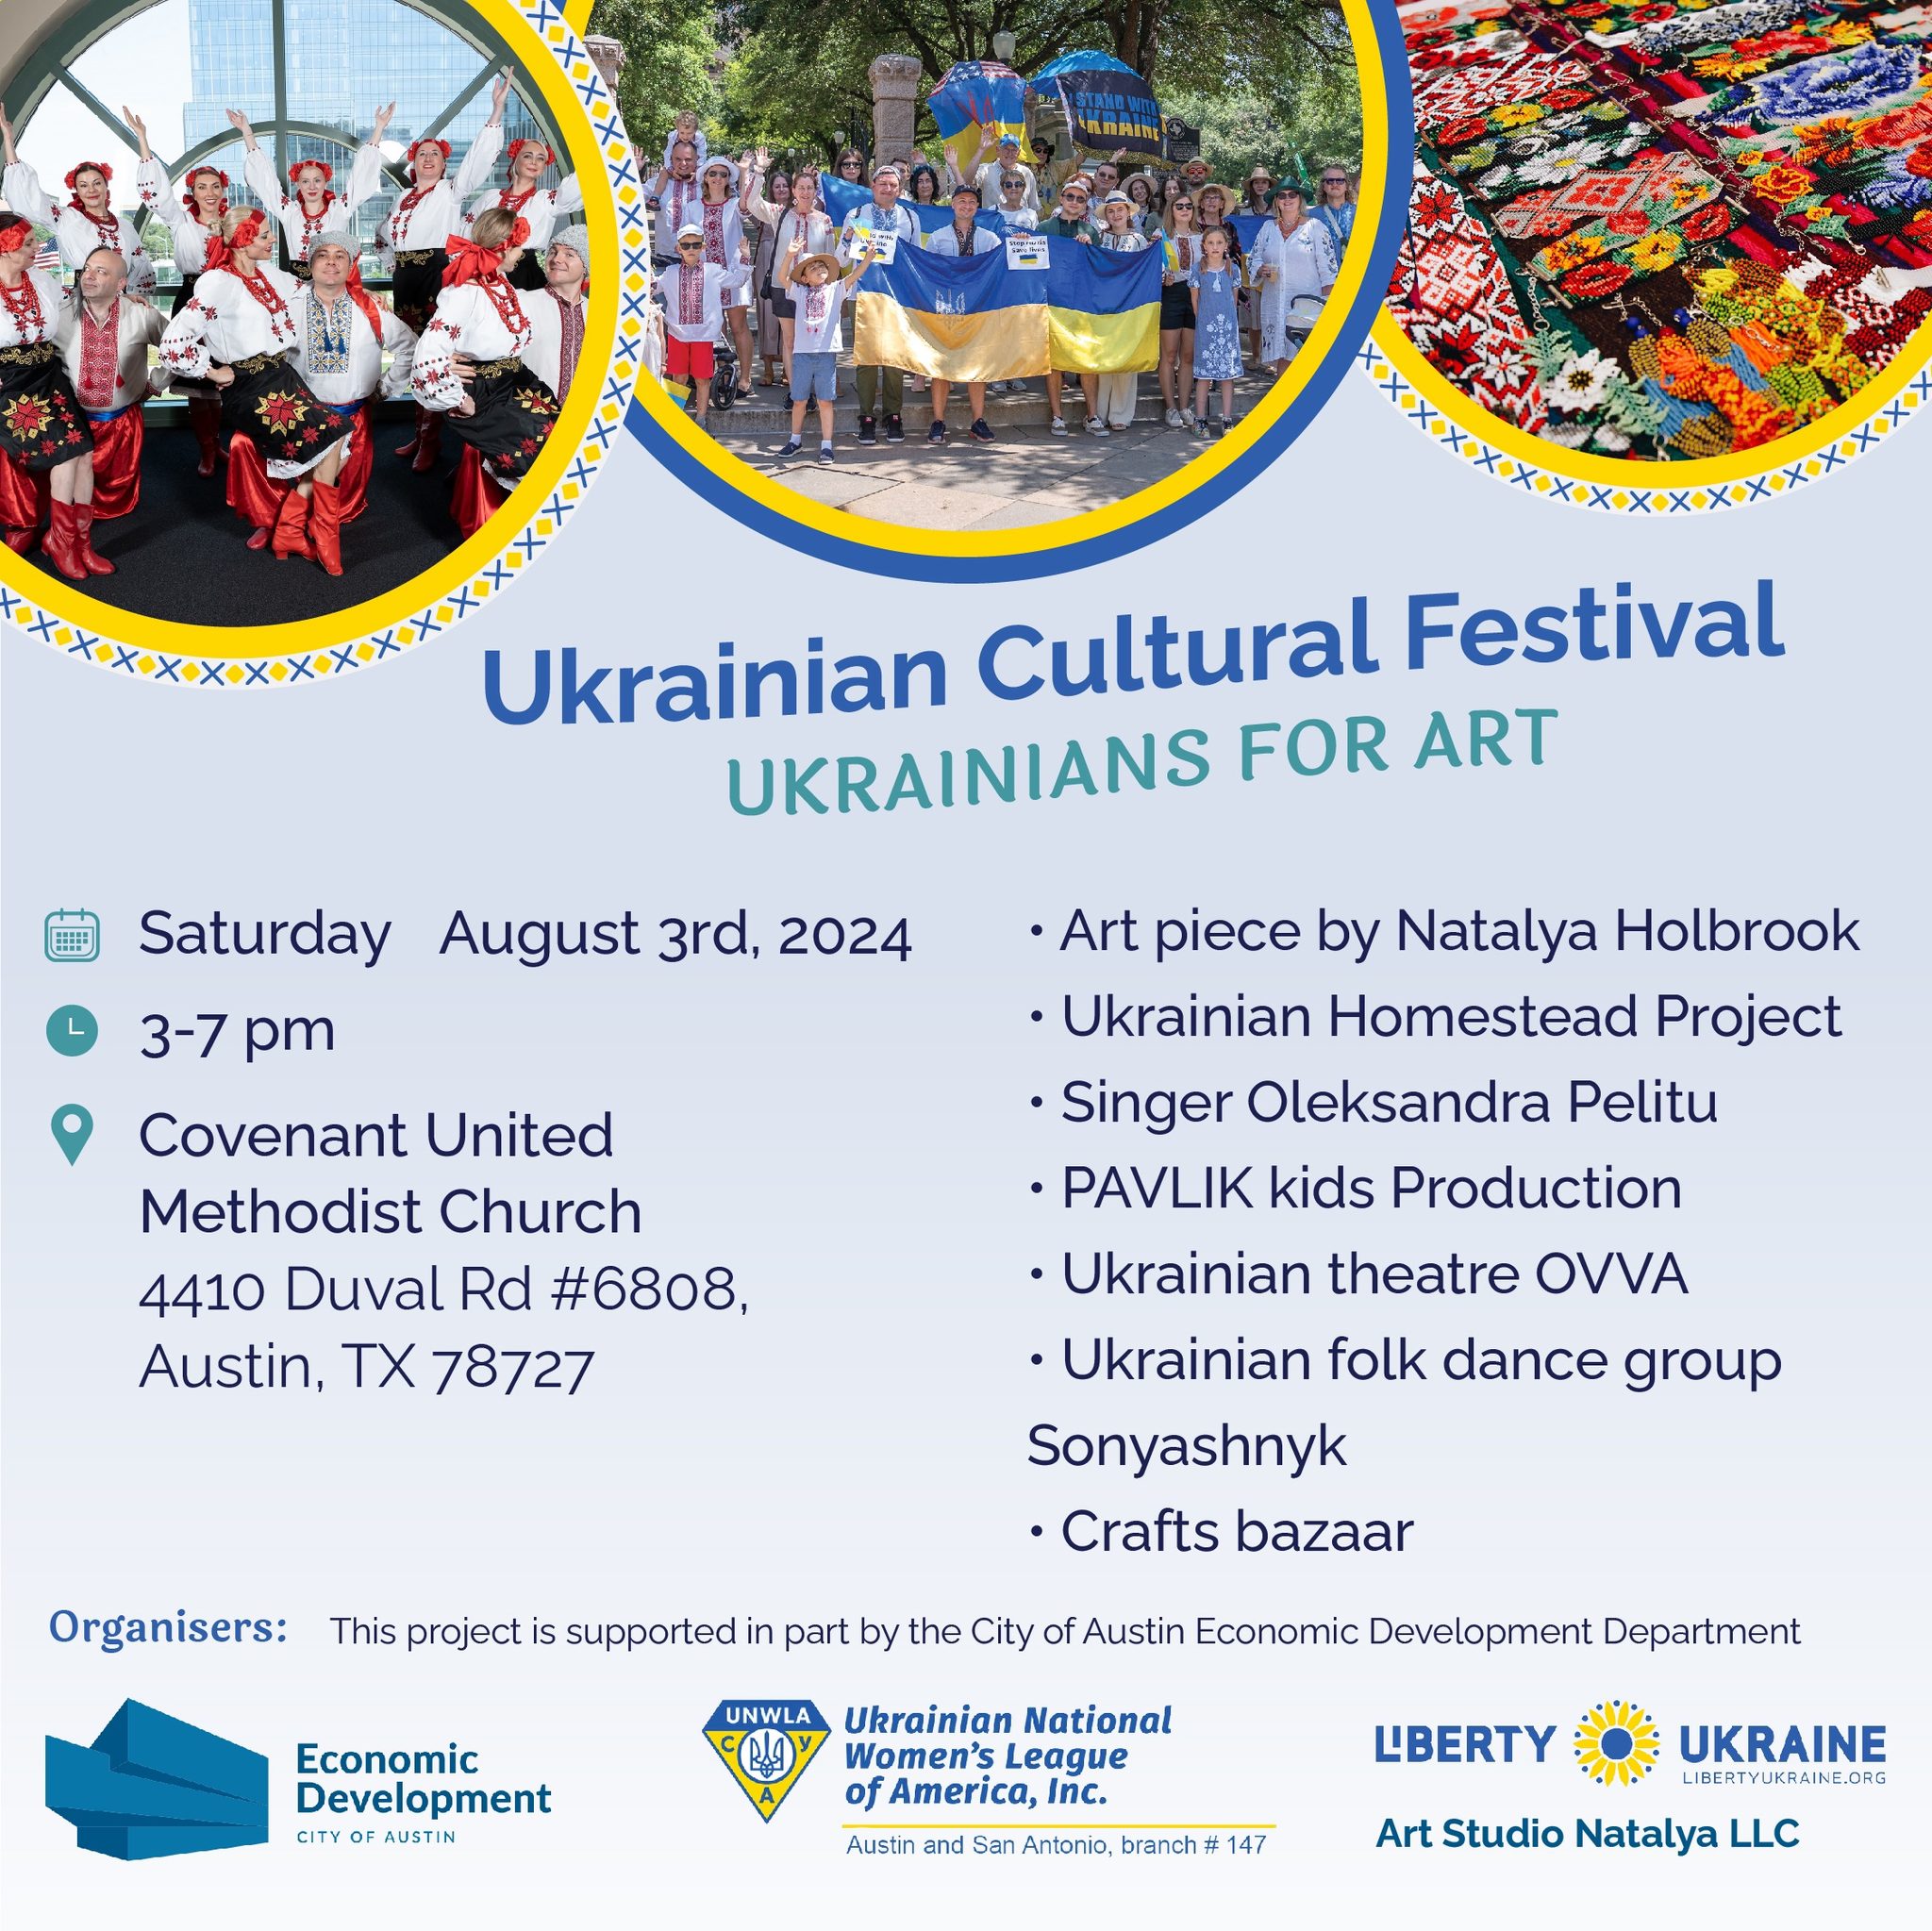 Ukrainian Cultural Festival - Aug 3 - TX